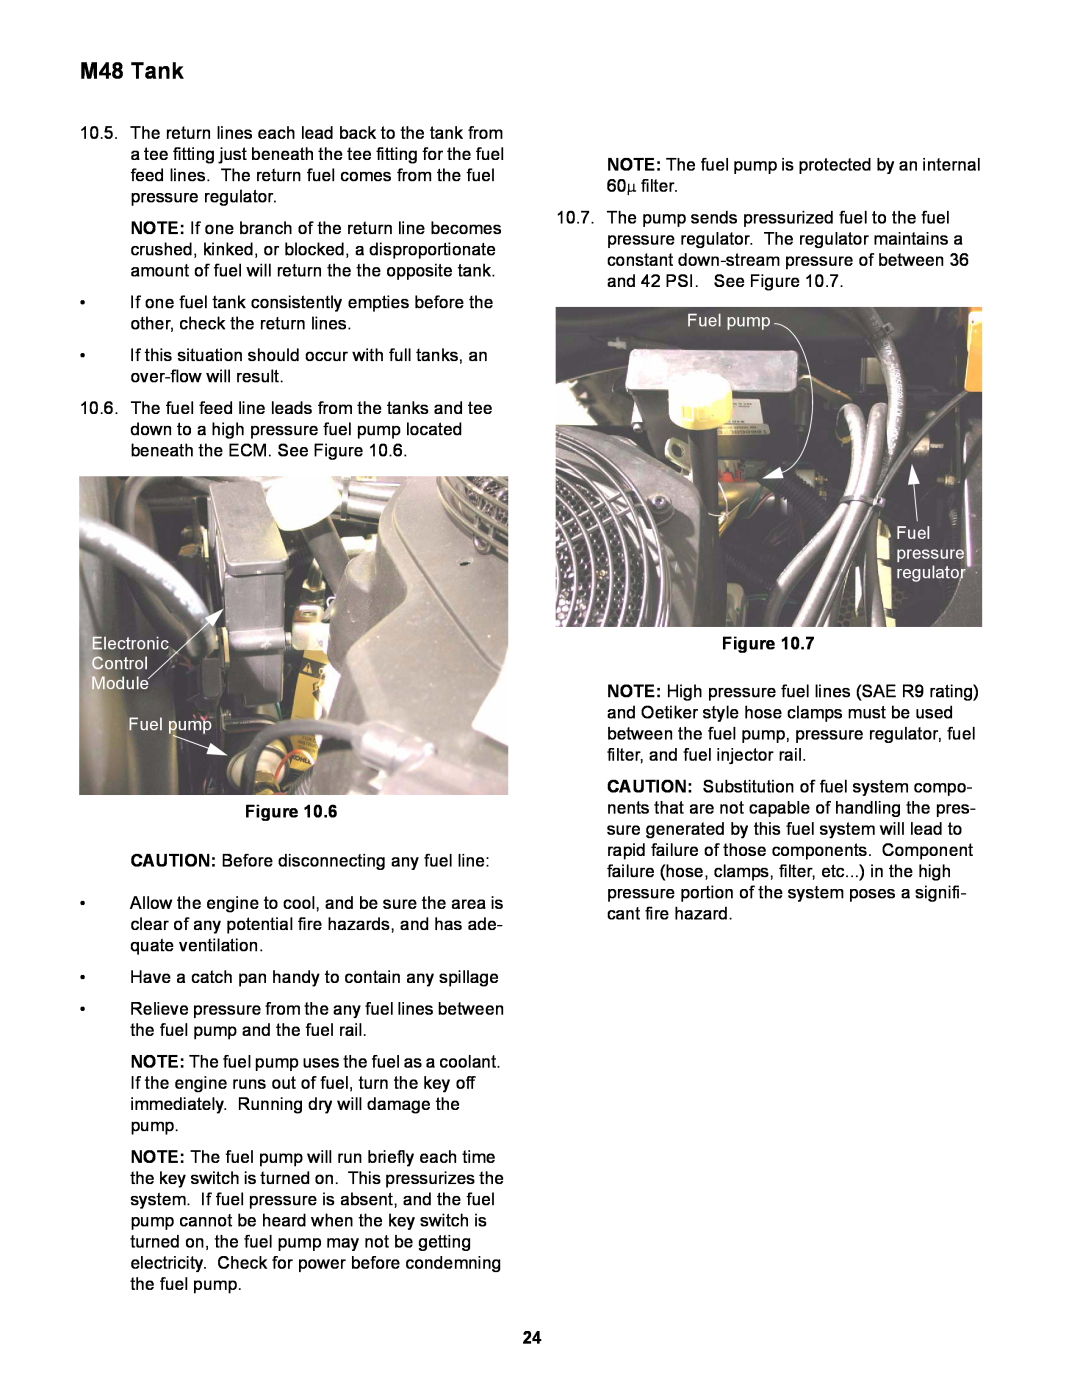 Cub Cadet service manual M48 Tank, Electronic Control Module Fuel pump, Figure, Fuel pump Fuel pressure regulator 